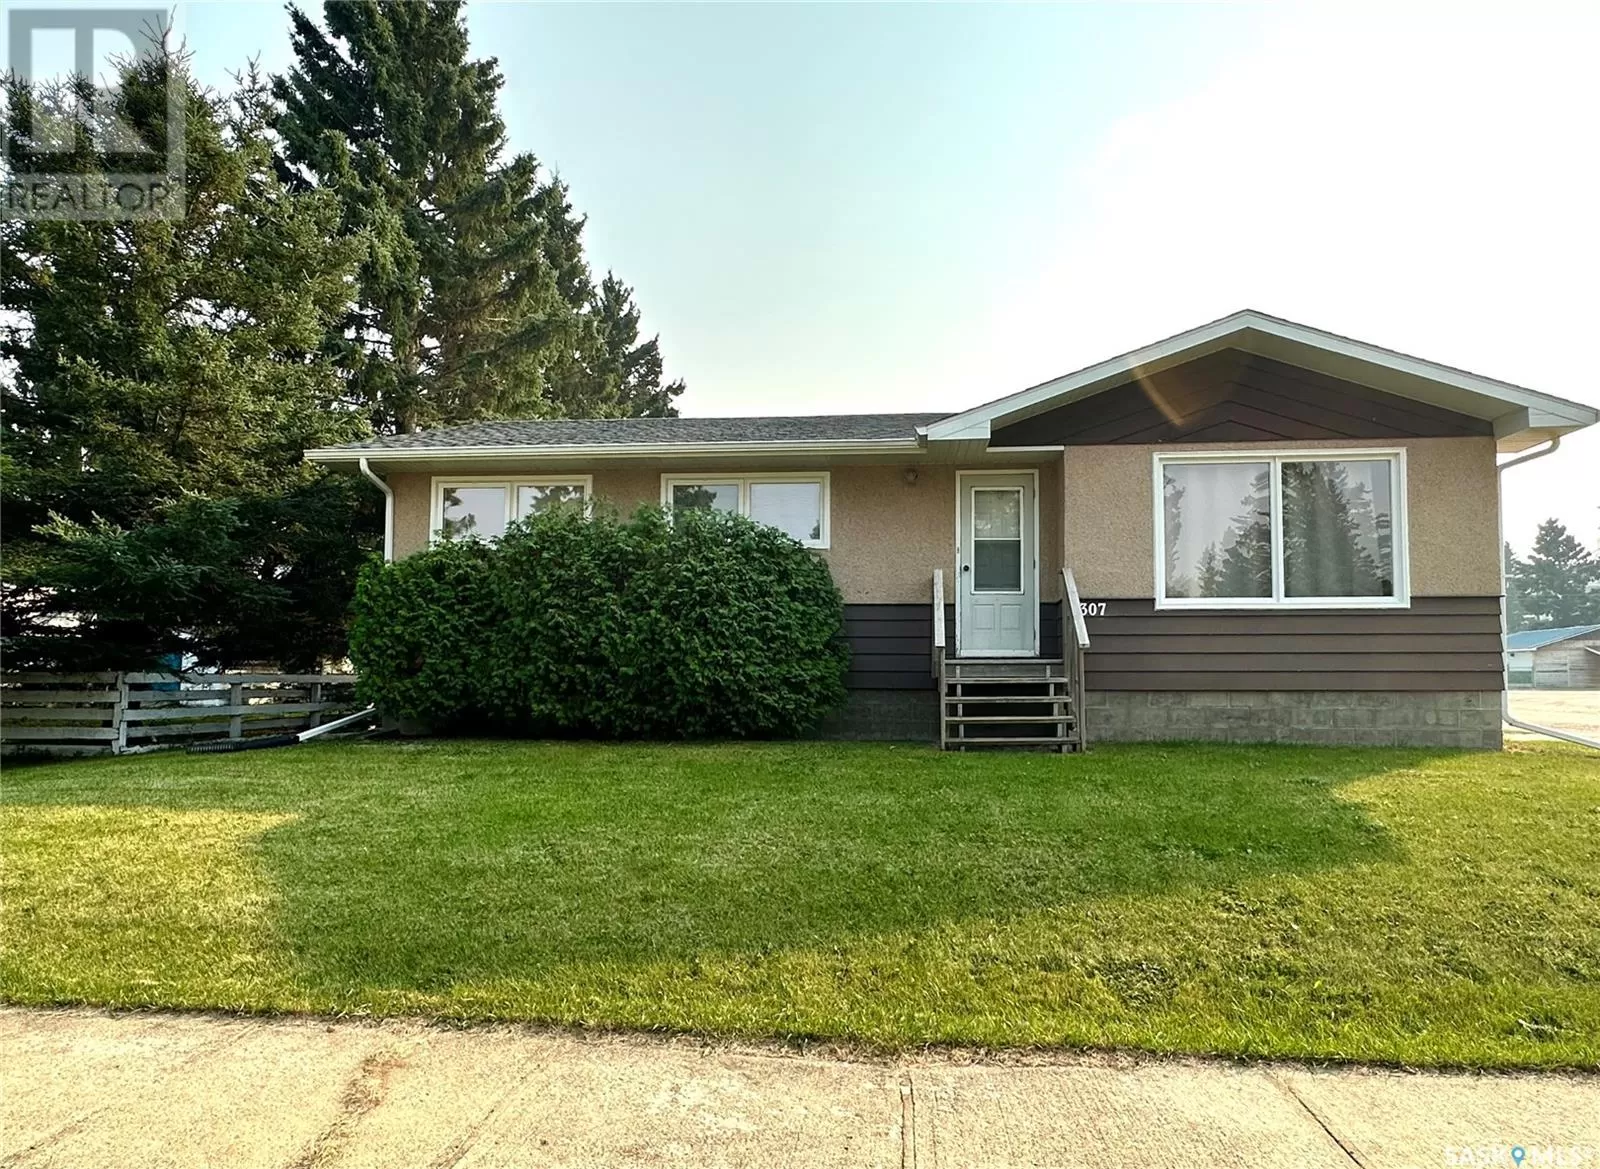 House for rent: 307 3rd Avenue, Medstead, Saskatchewan S0M 1W0